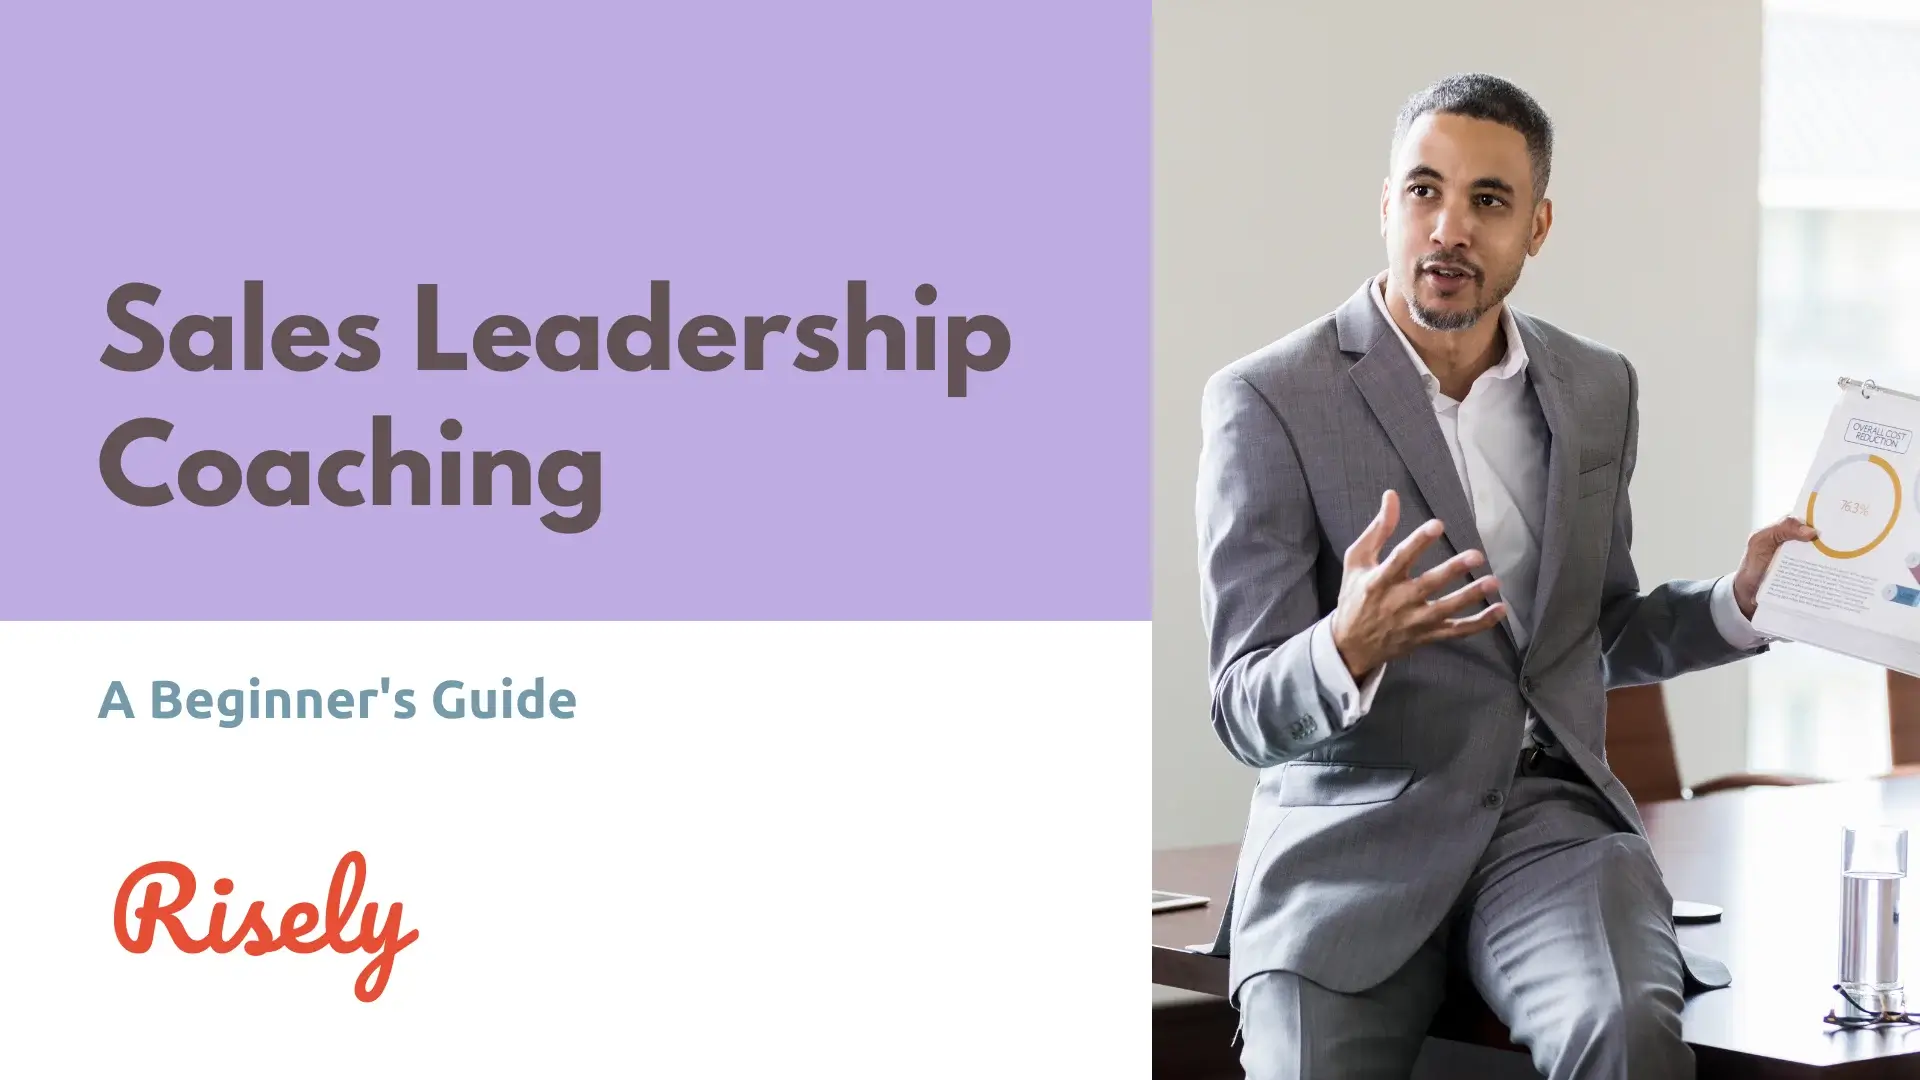 Sales Leadership Coaching: A Beginner’s Guide